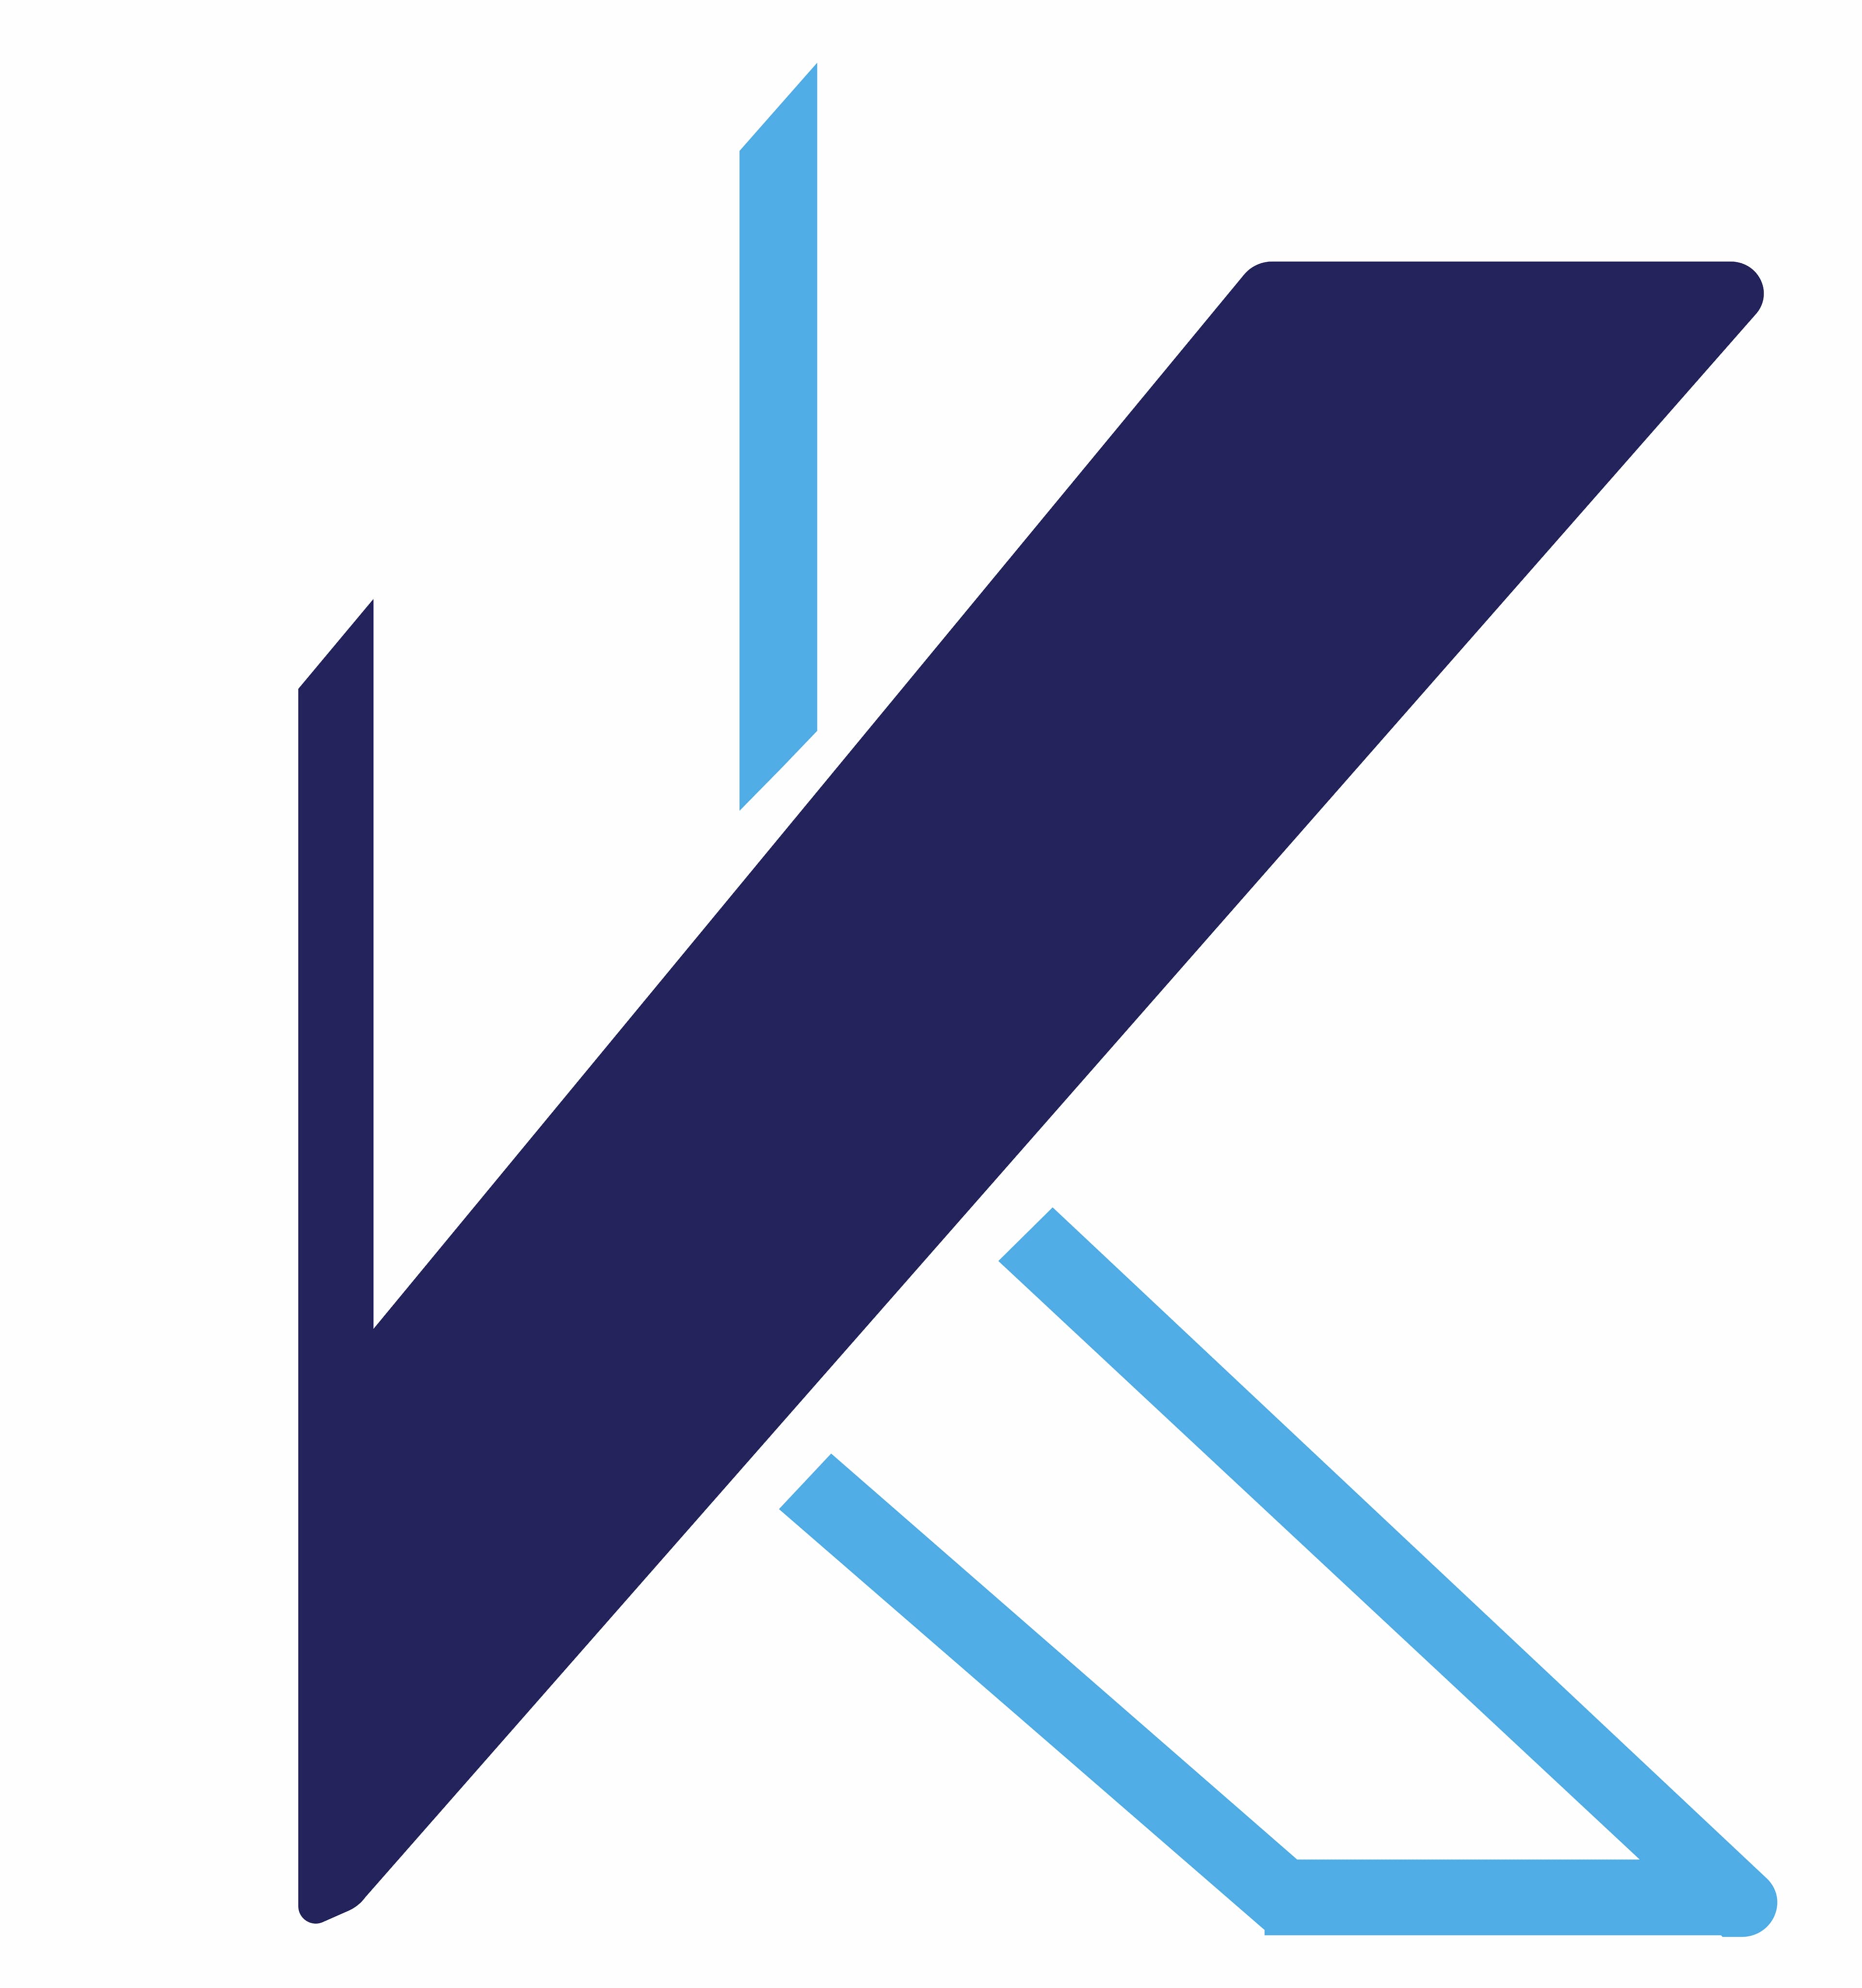 kvisionex's logo